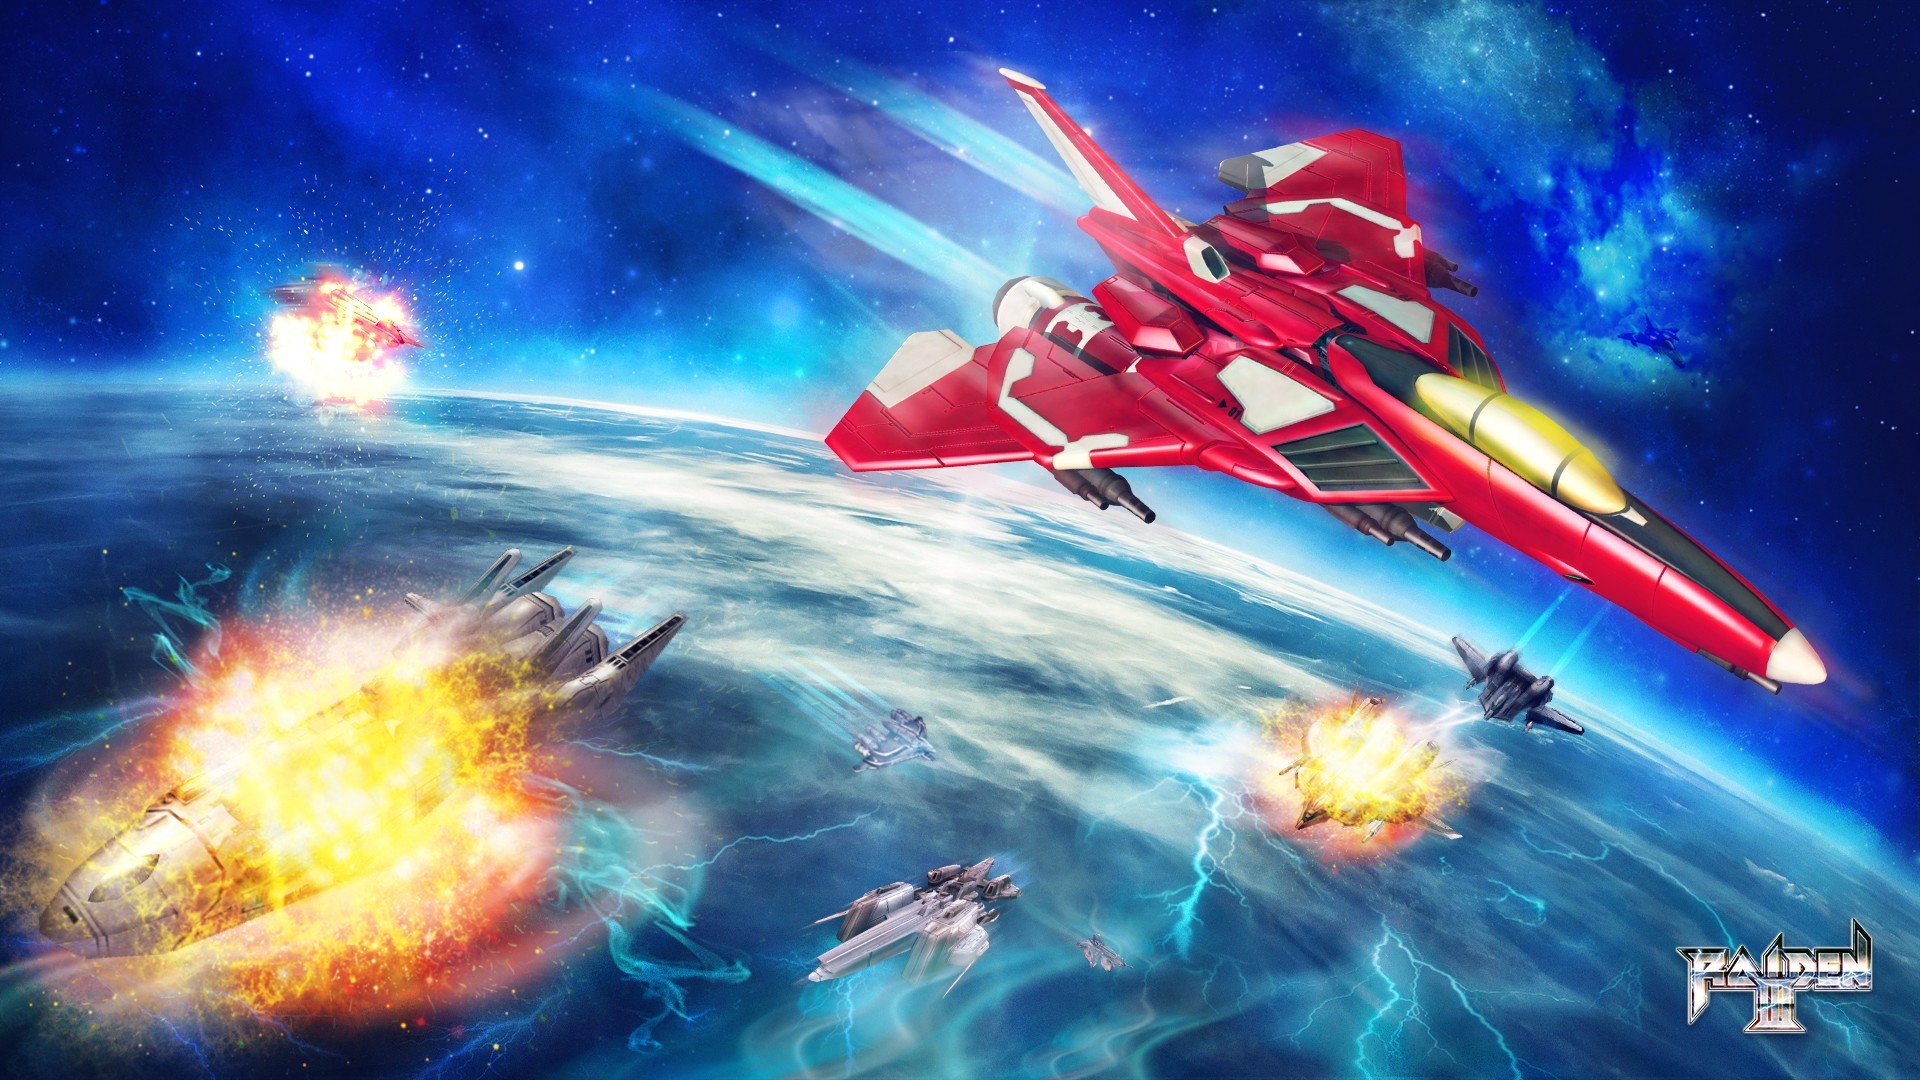 Raiden III, Ship, Spaceship, Space, Planet, War, Jet fighter, Video games Wallpaper